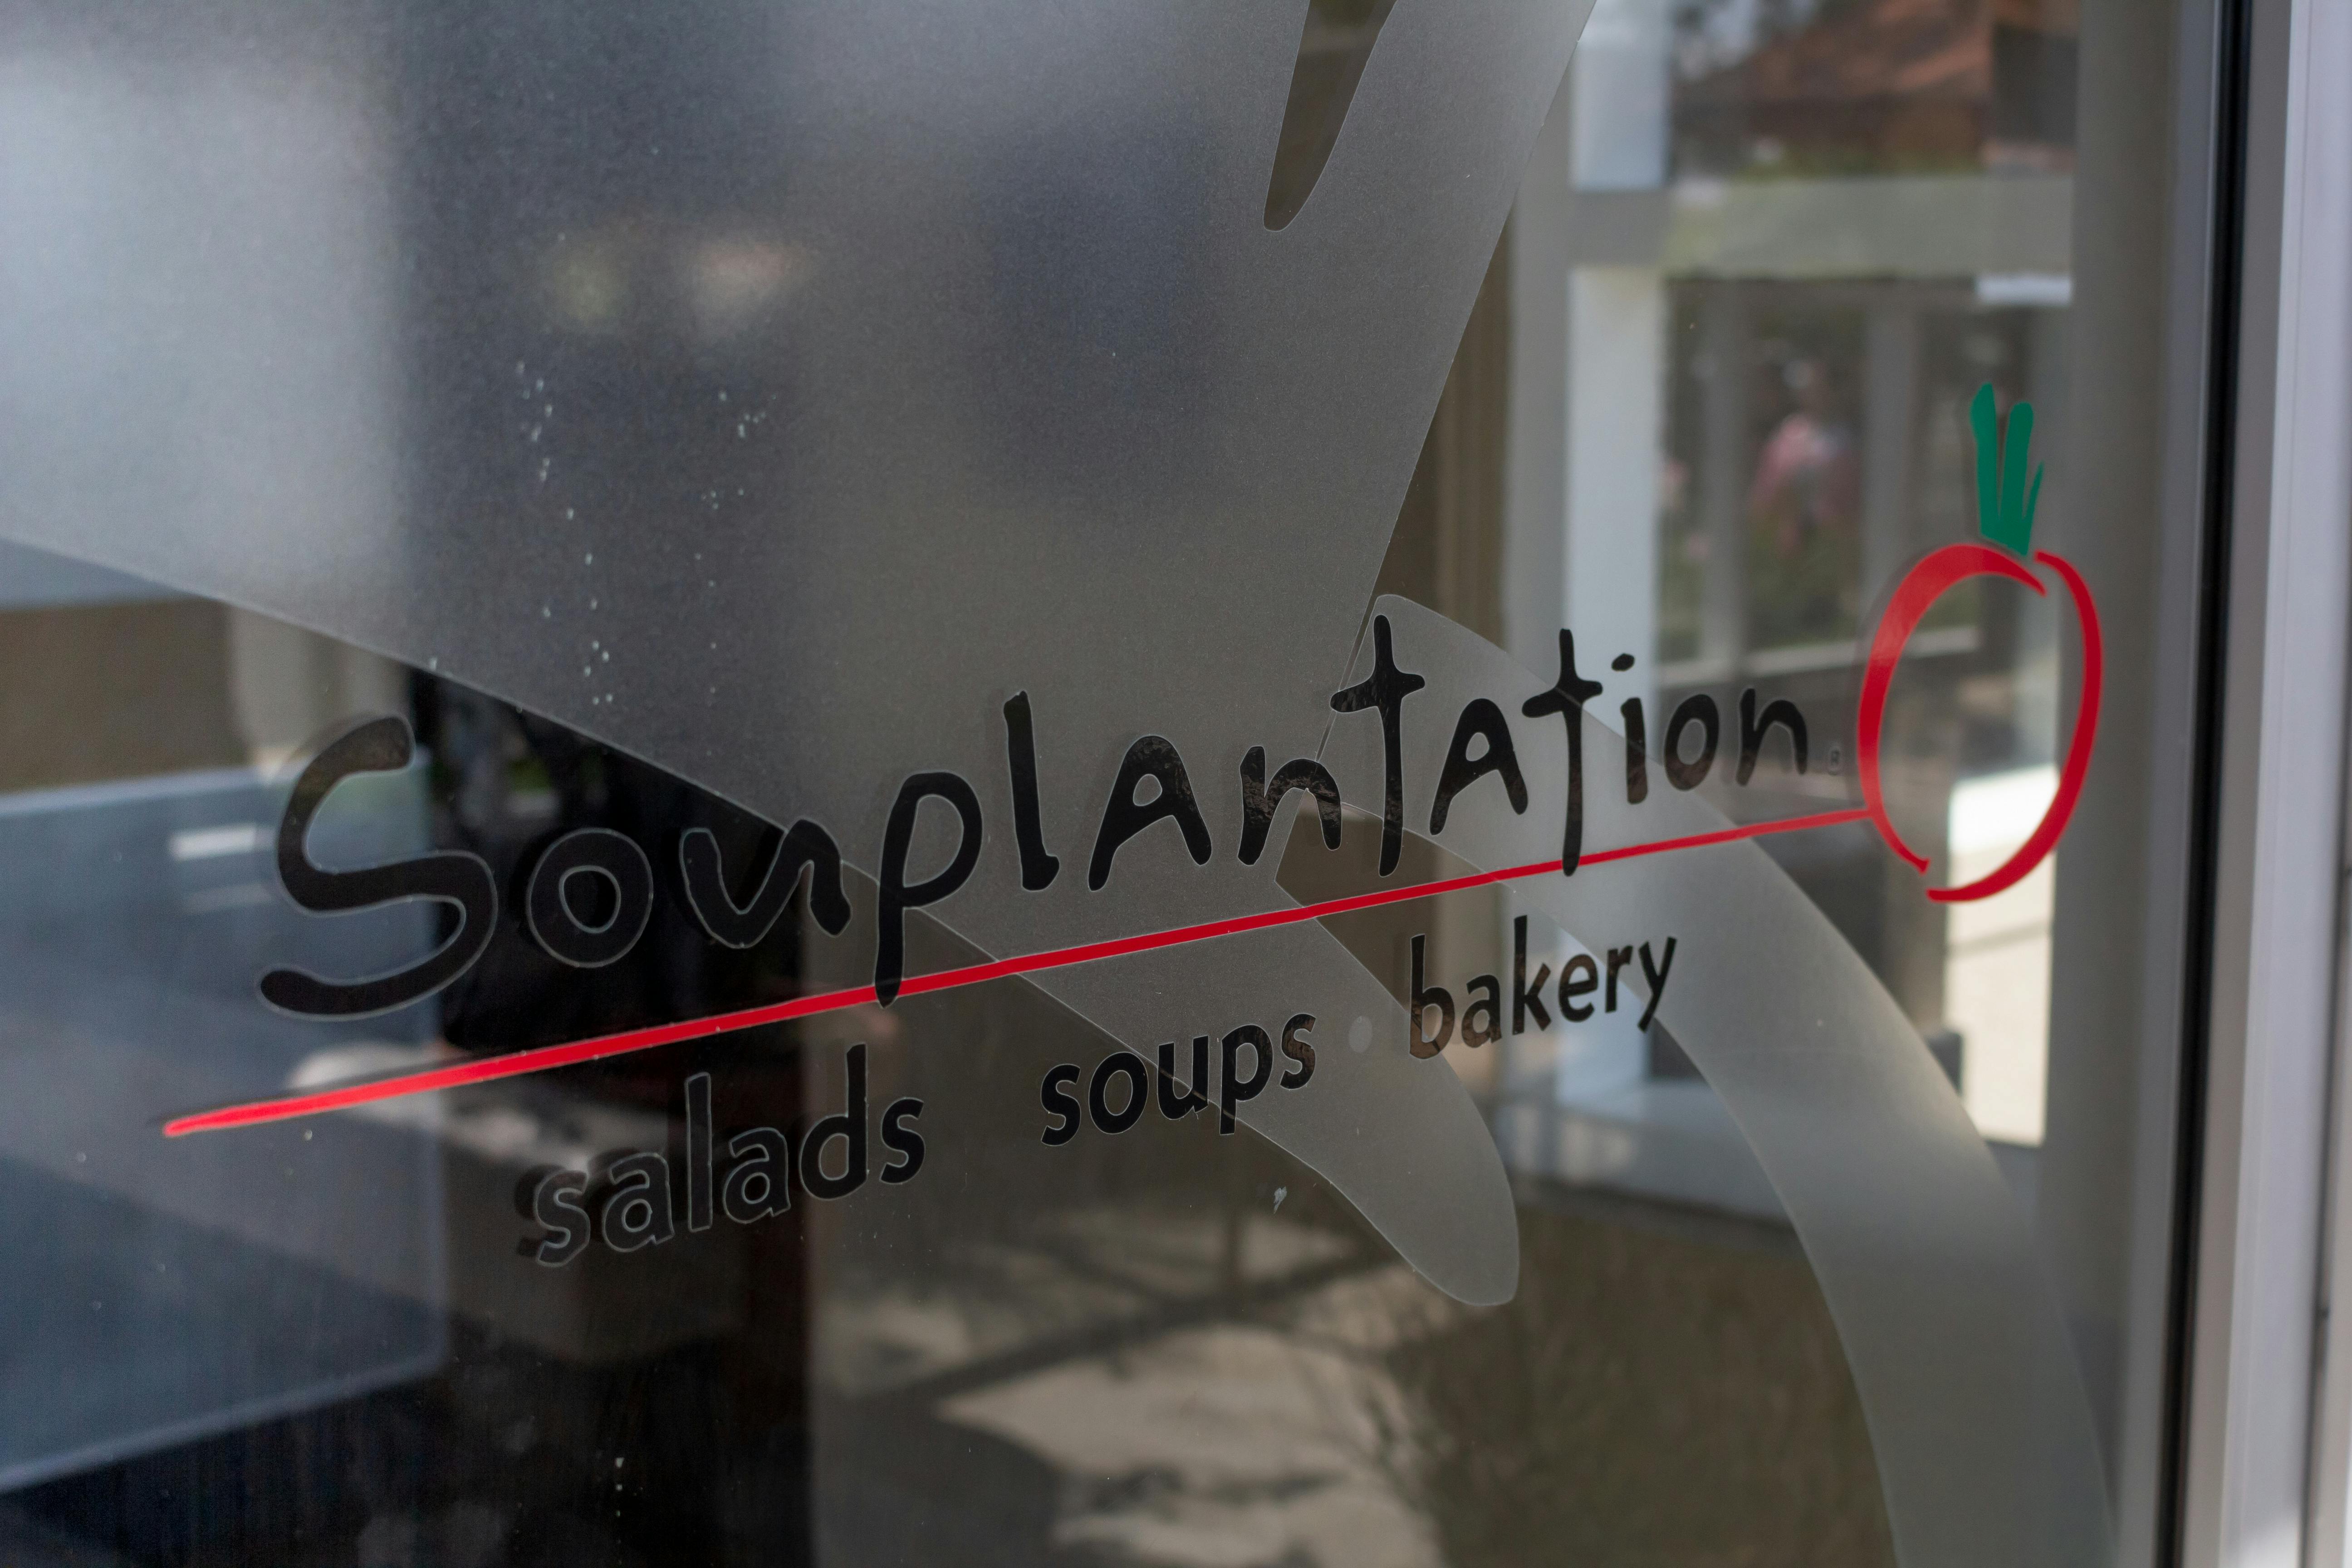 Souplantation branding on a glass door